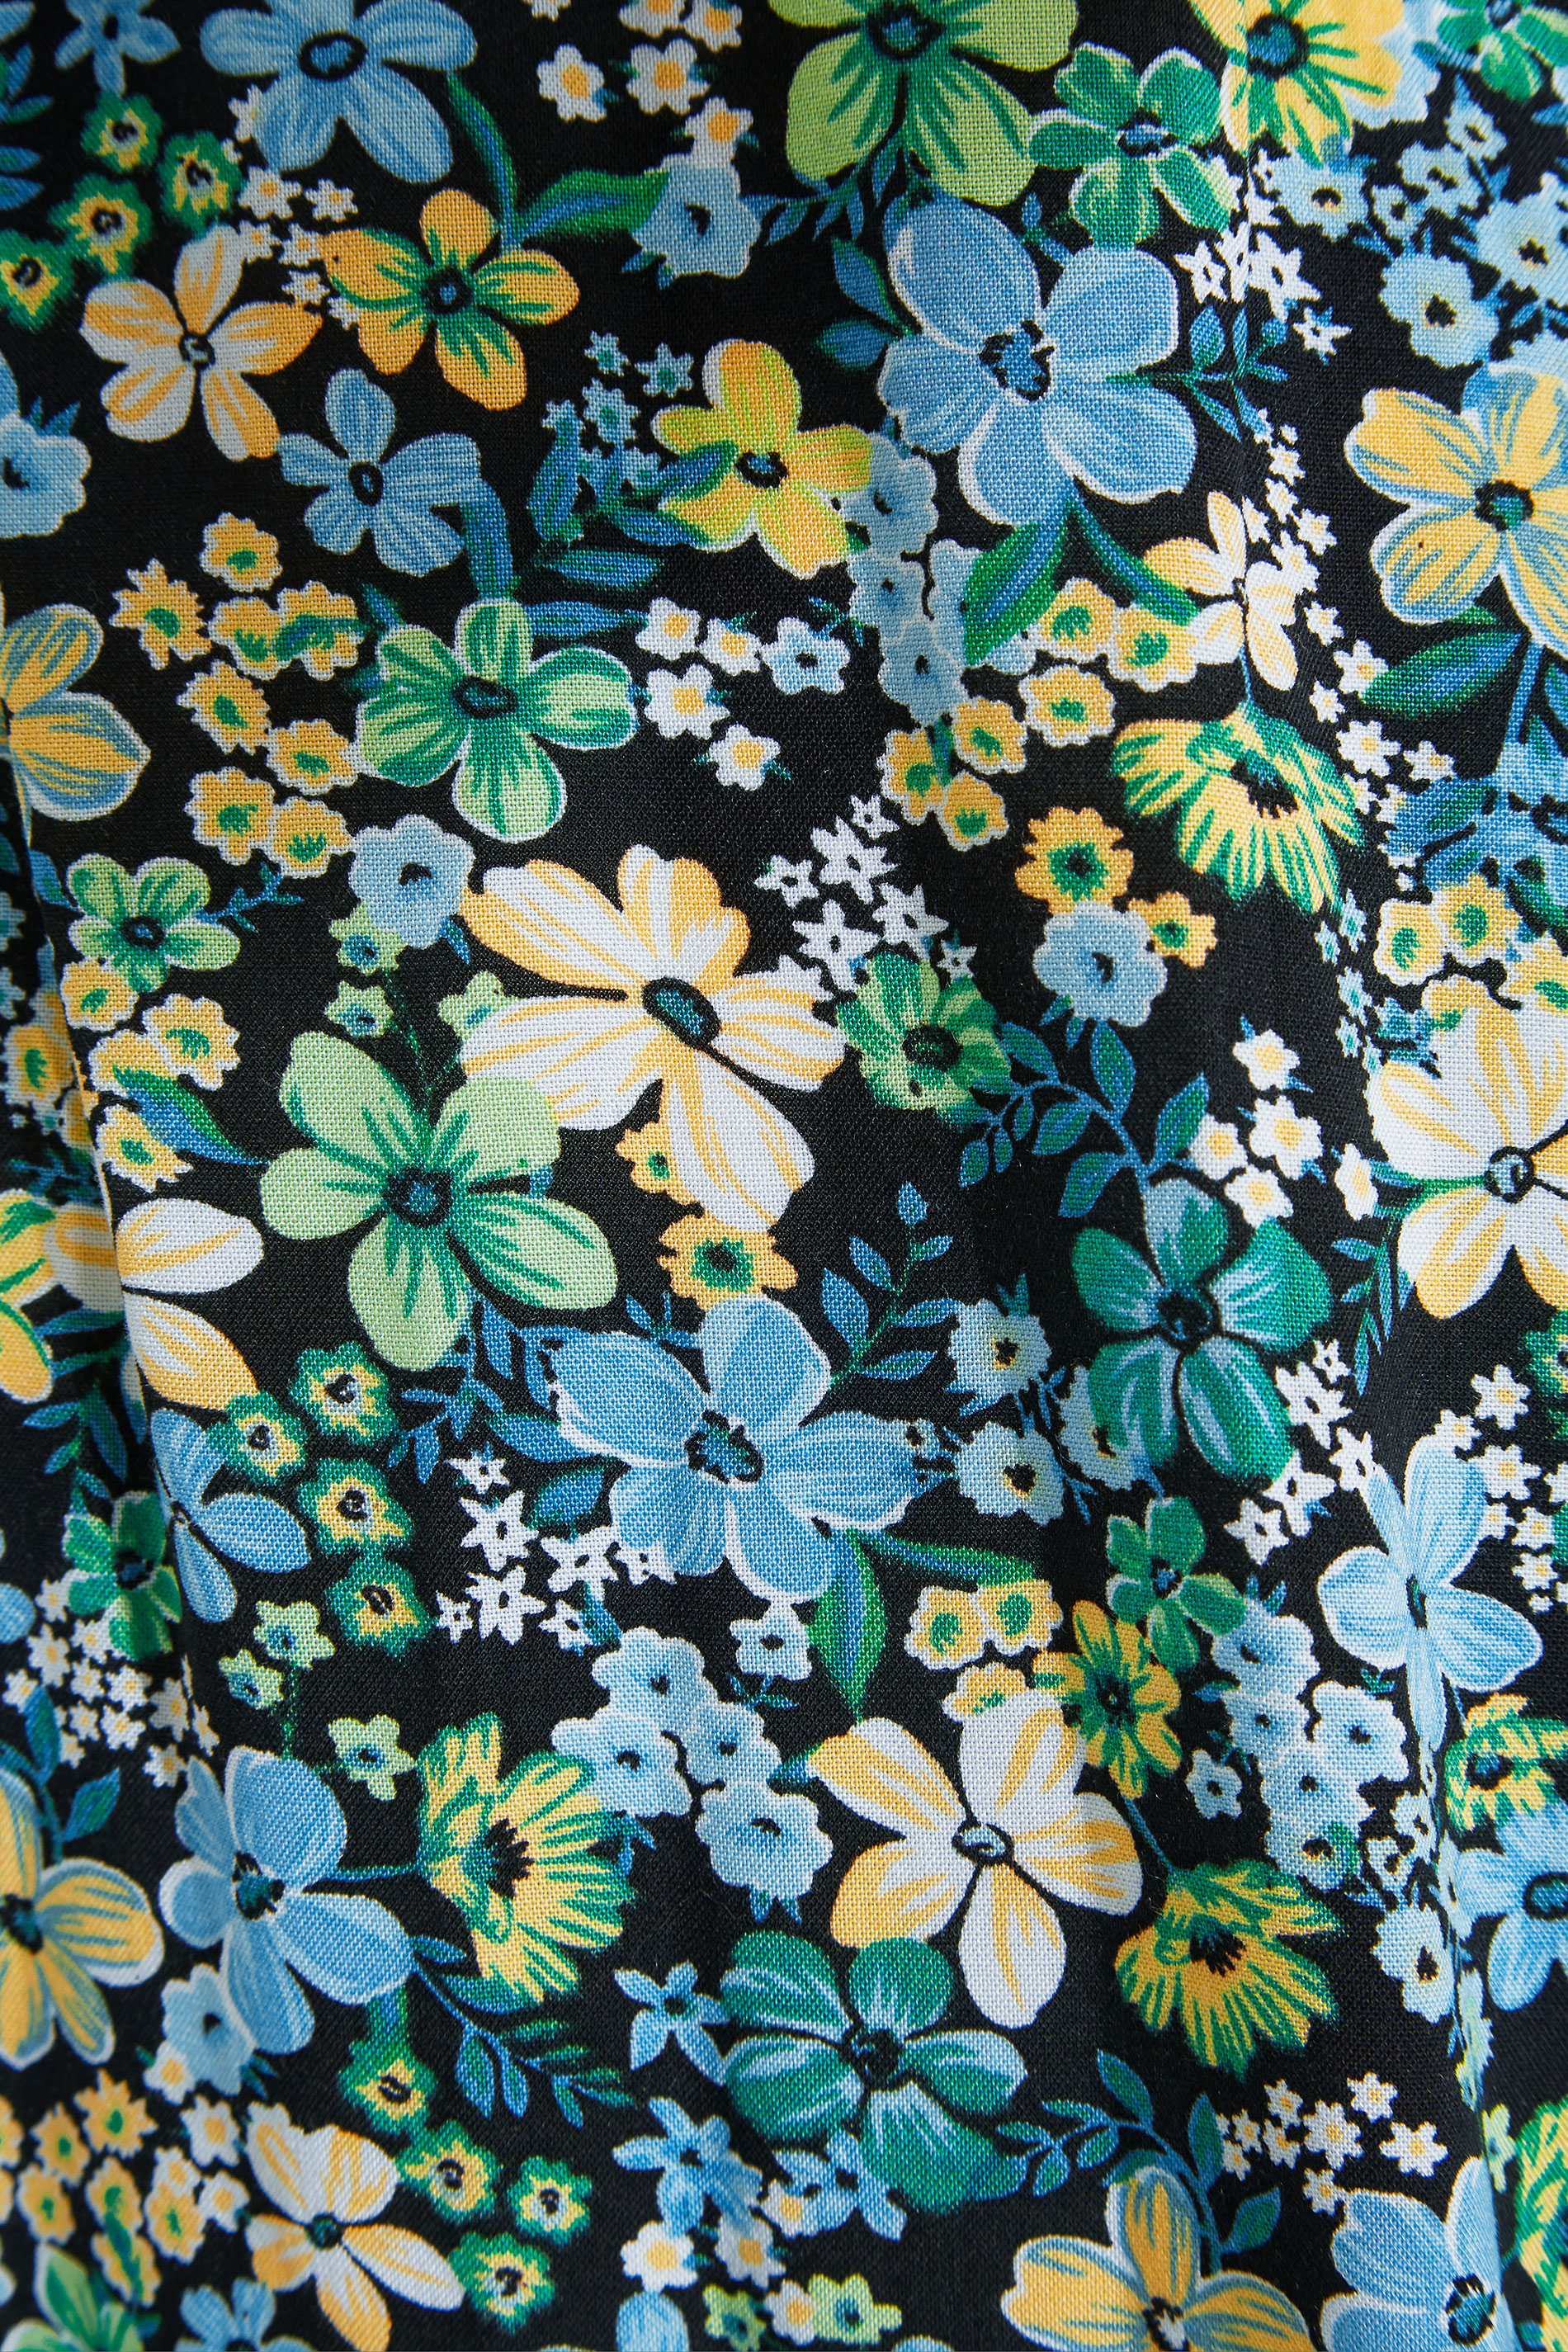 Grande taille  Pantalons Grande taille  Pantacourts | Jupe-Culotte Bleu & Vert Design Floral - CH64315